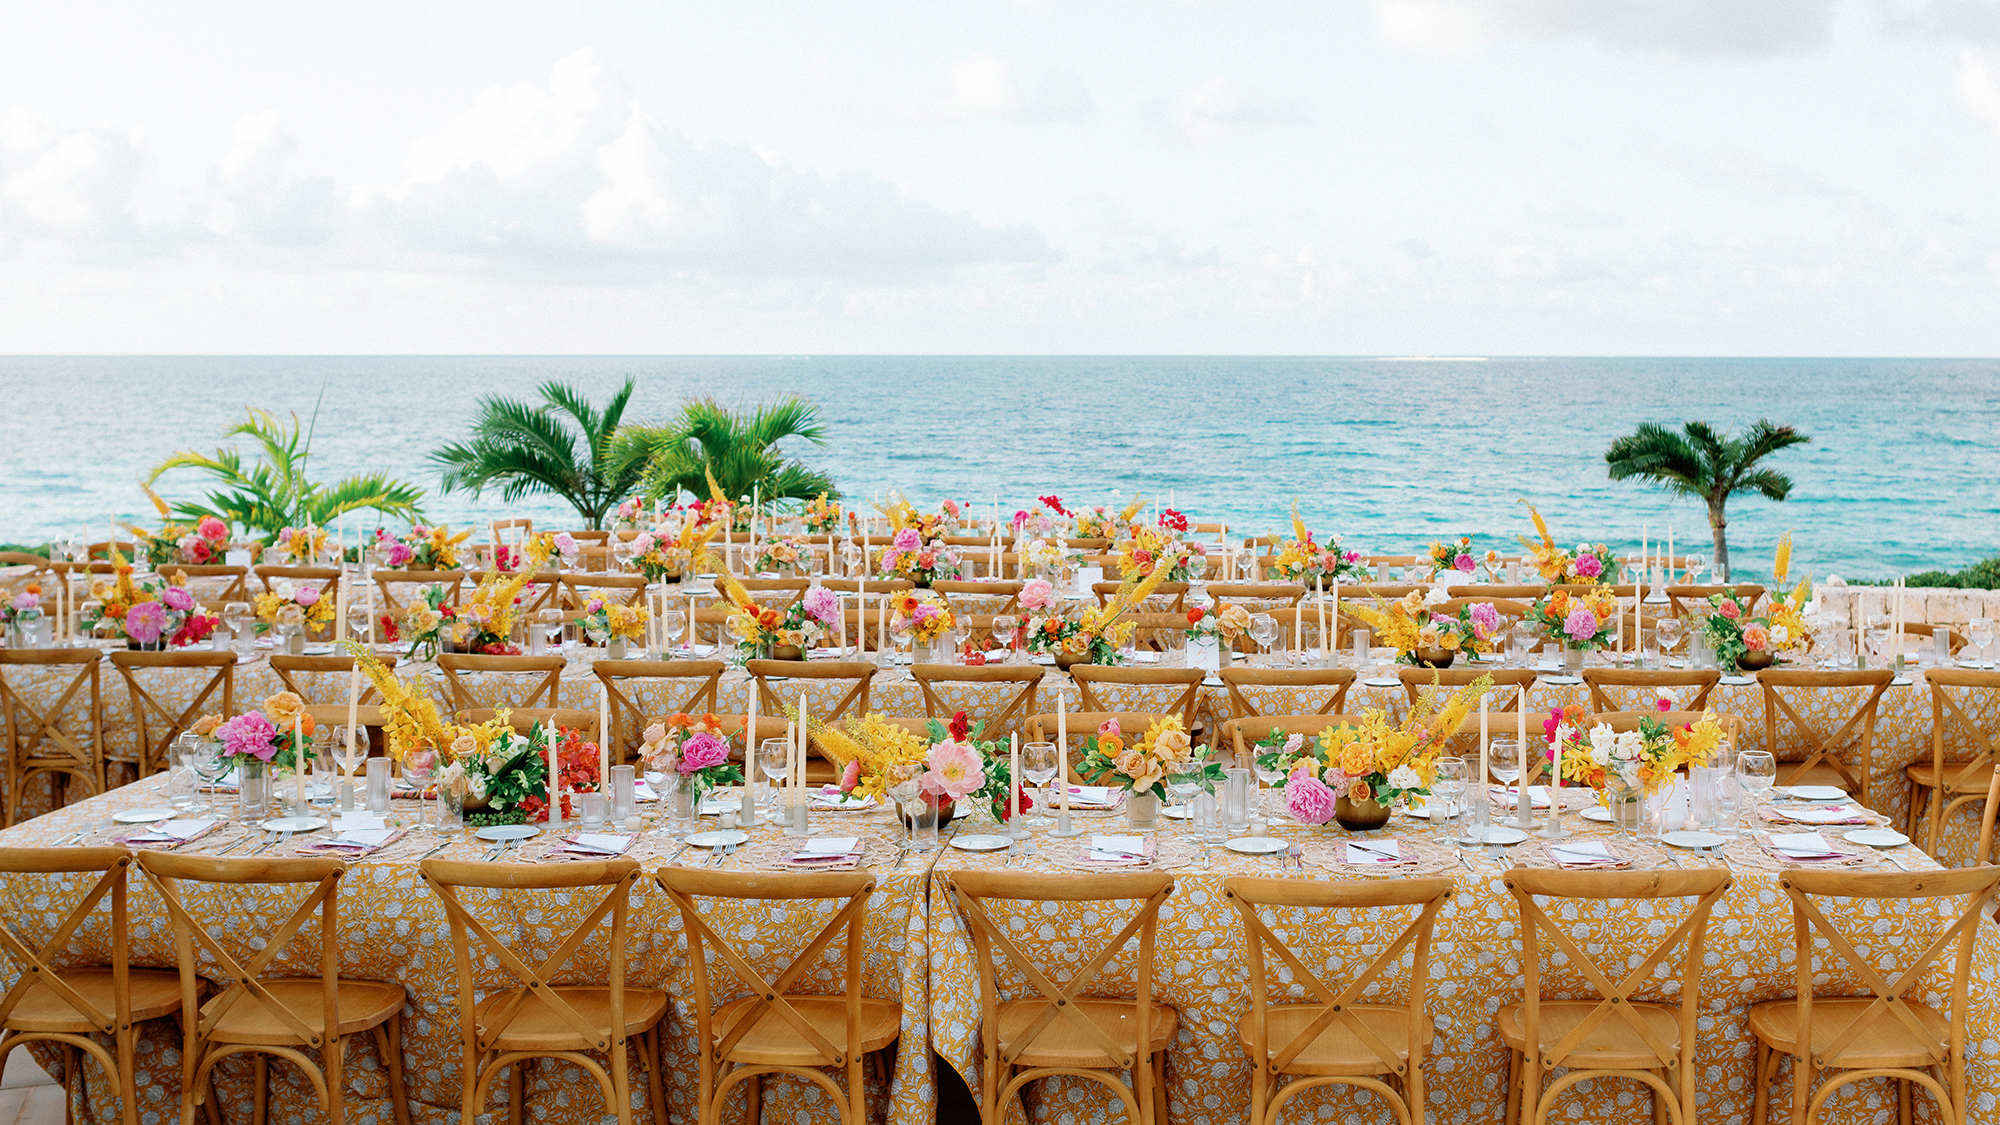 Private Caribbean destination wedding venue